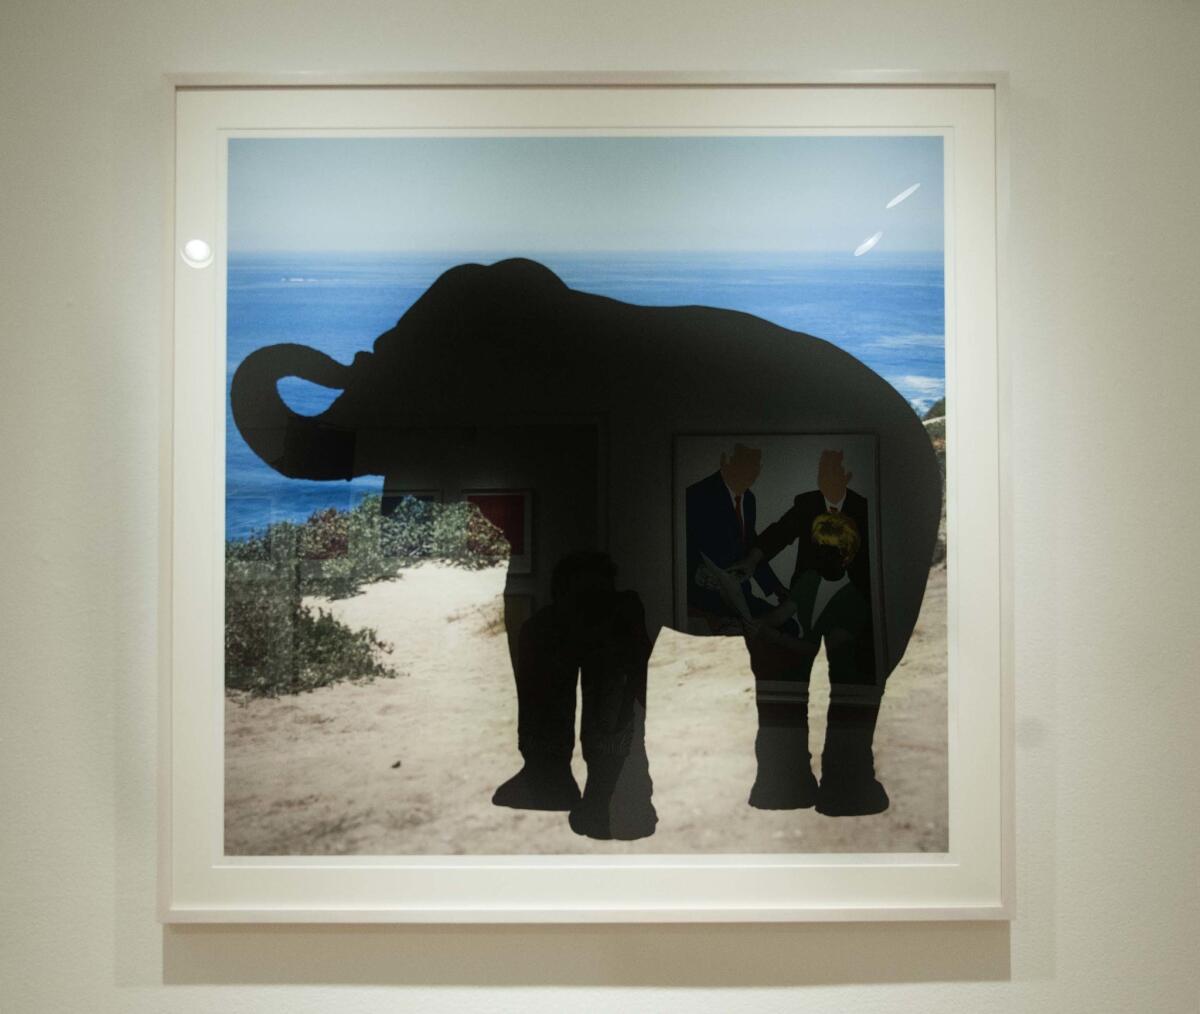 "Animal (Black) at Ocean: Tranquil," by John Baldessari, a digital print on exhibit at the Laguna Art Museum.